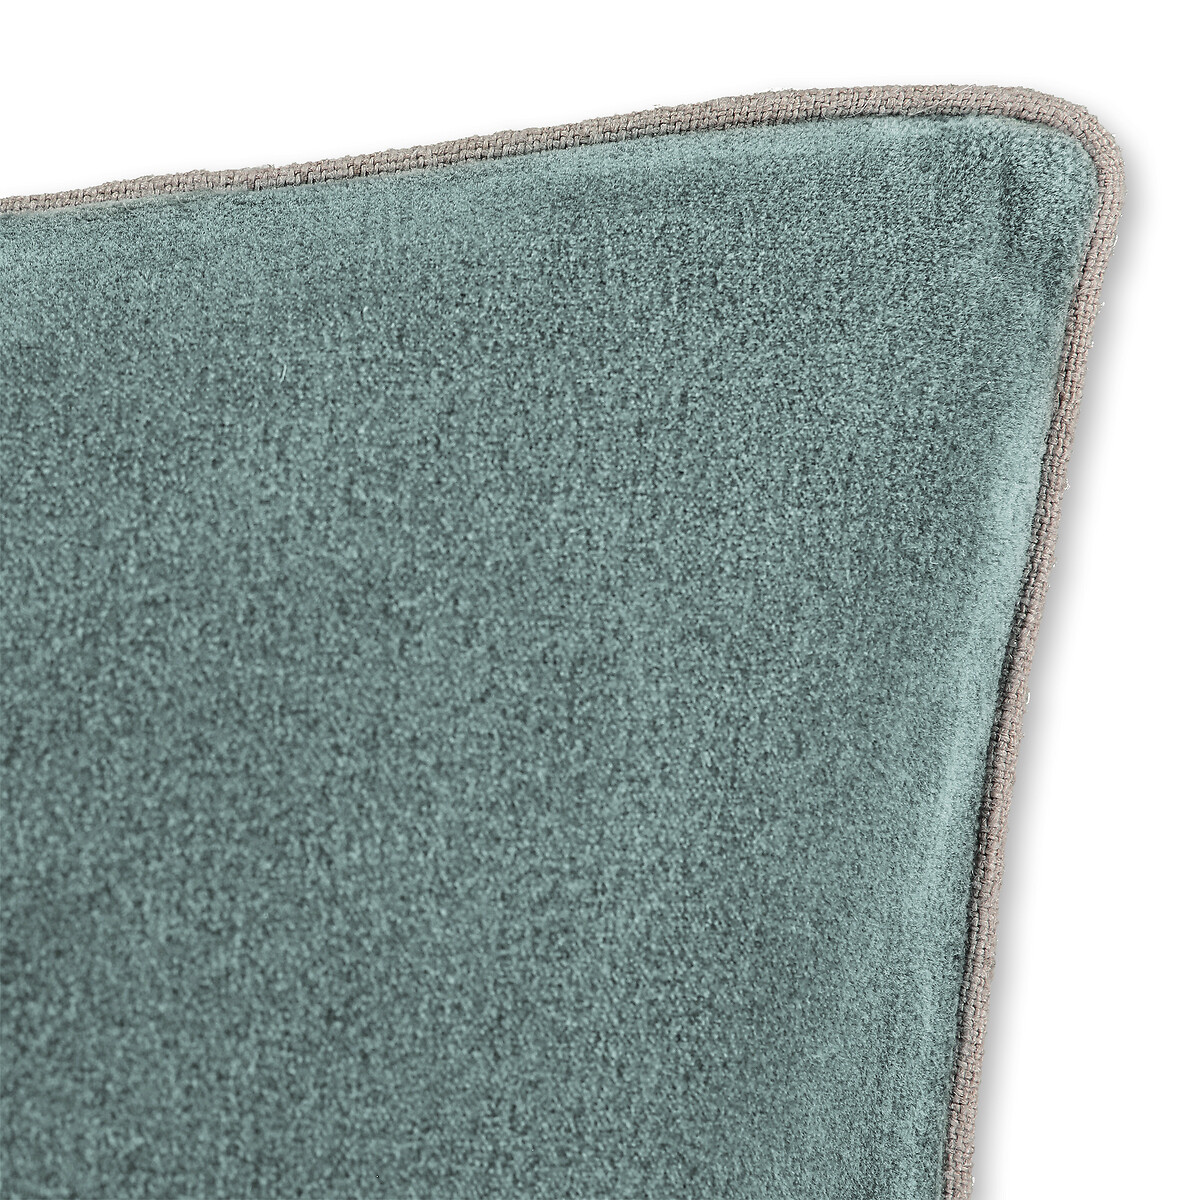 Чехол LaRedoute На подушку из 100 велюра Kontura 50 x 50 см зеленый, размер 50 x 50 см - фото 2